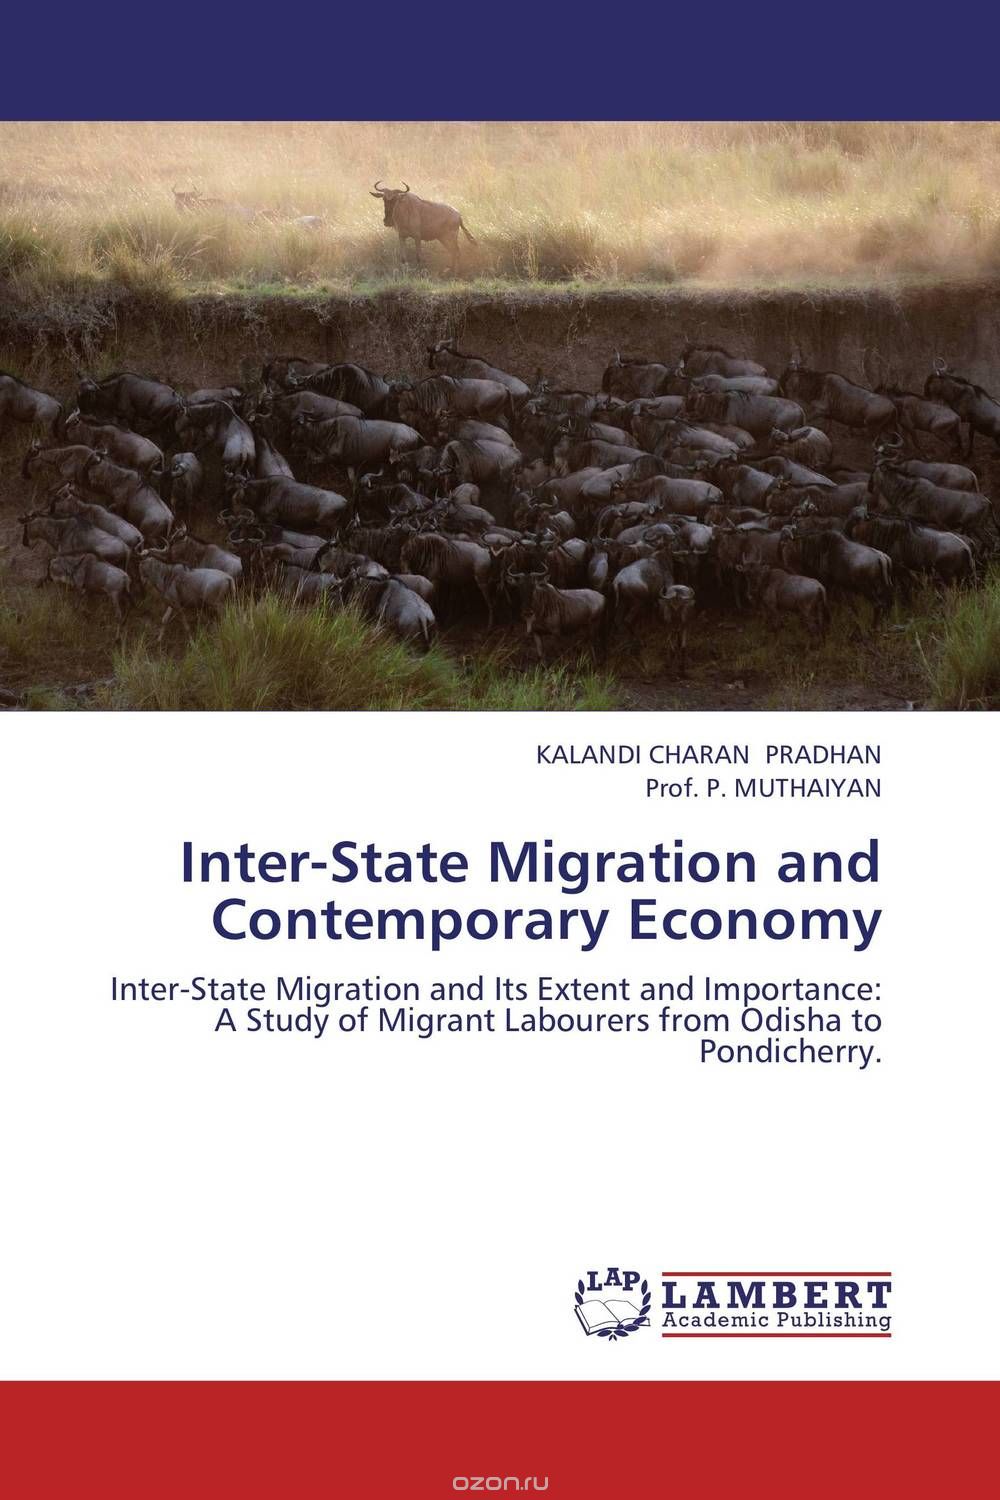 Скачать книгу "Inter-State Migration and Contemporary Economy"